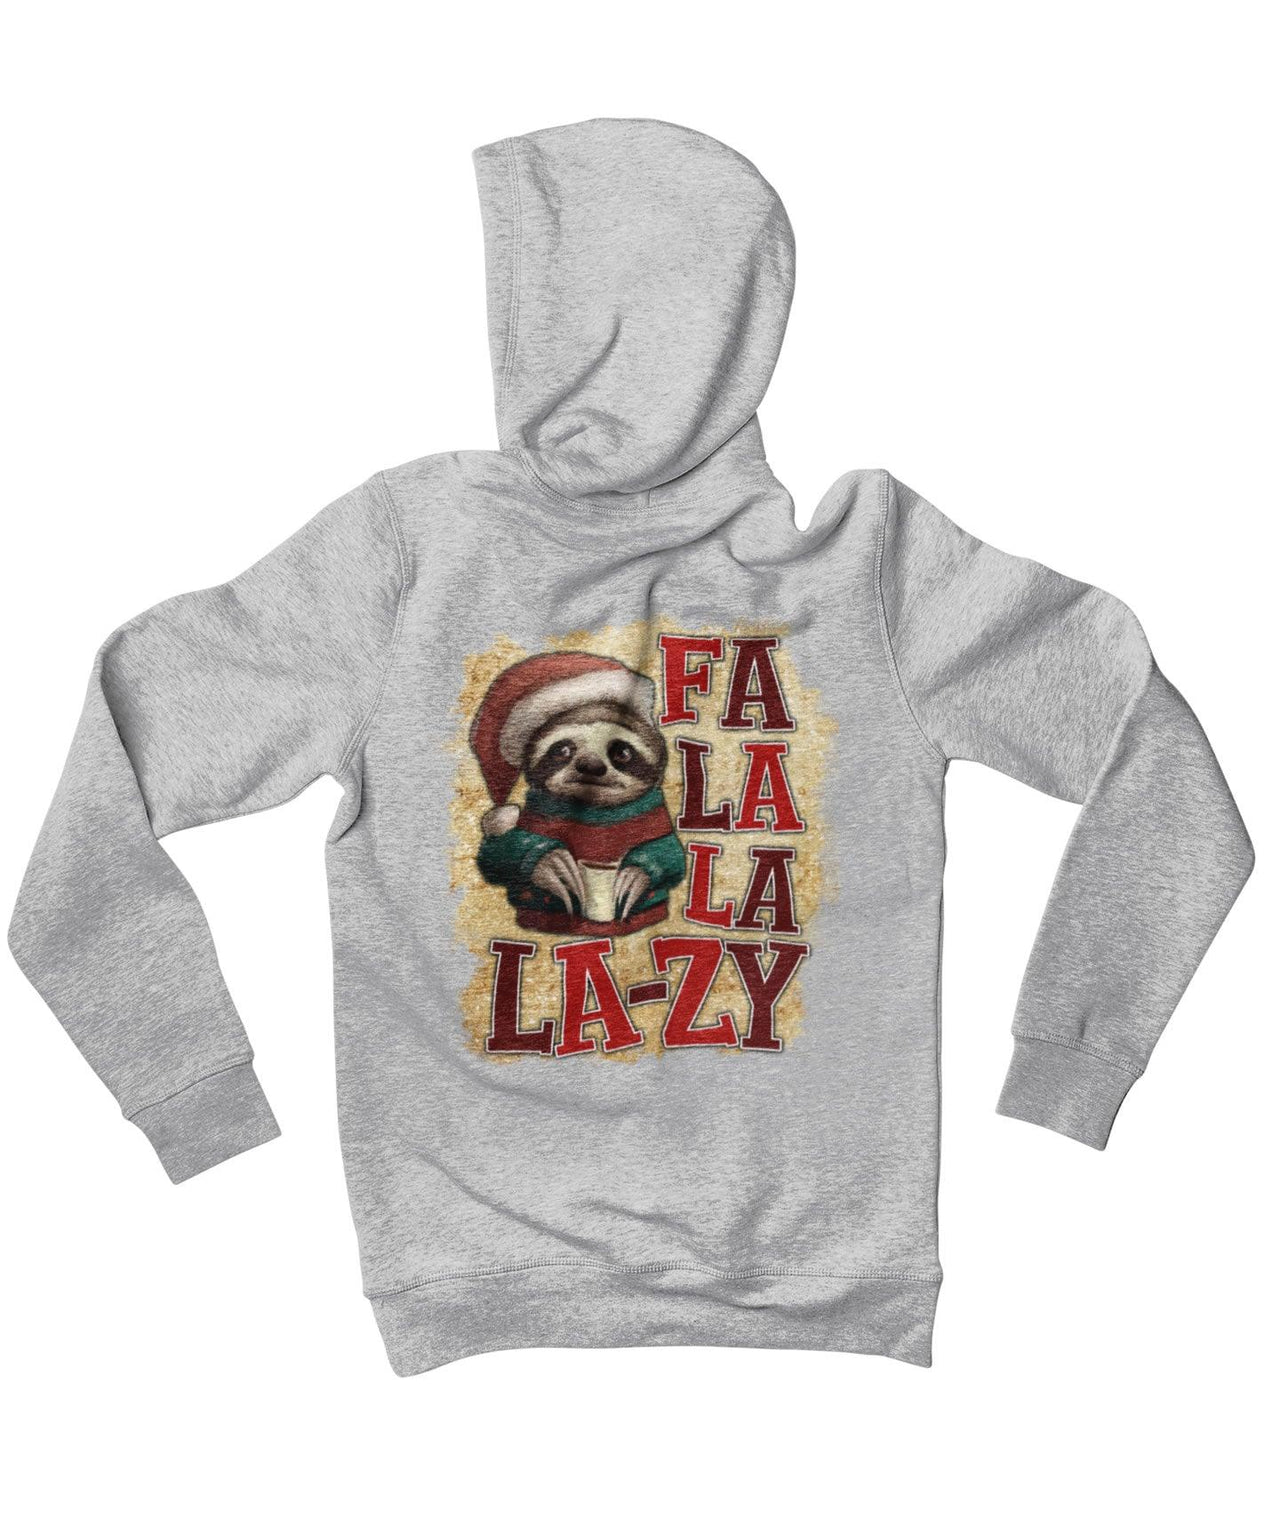 Sloth Fa La La Lazy Christmas Back Printed Unisex Hoodie 8Ball